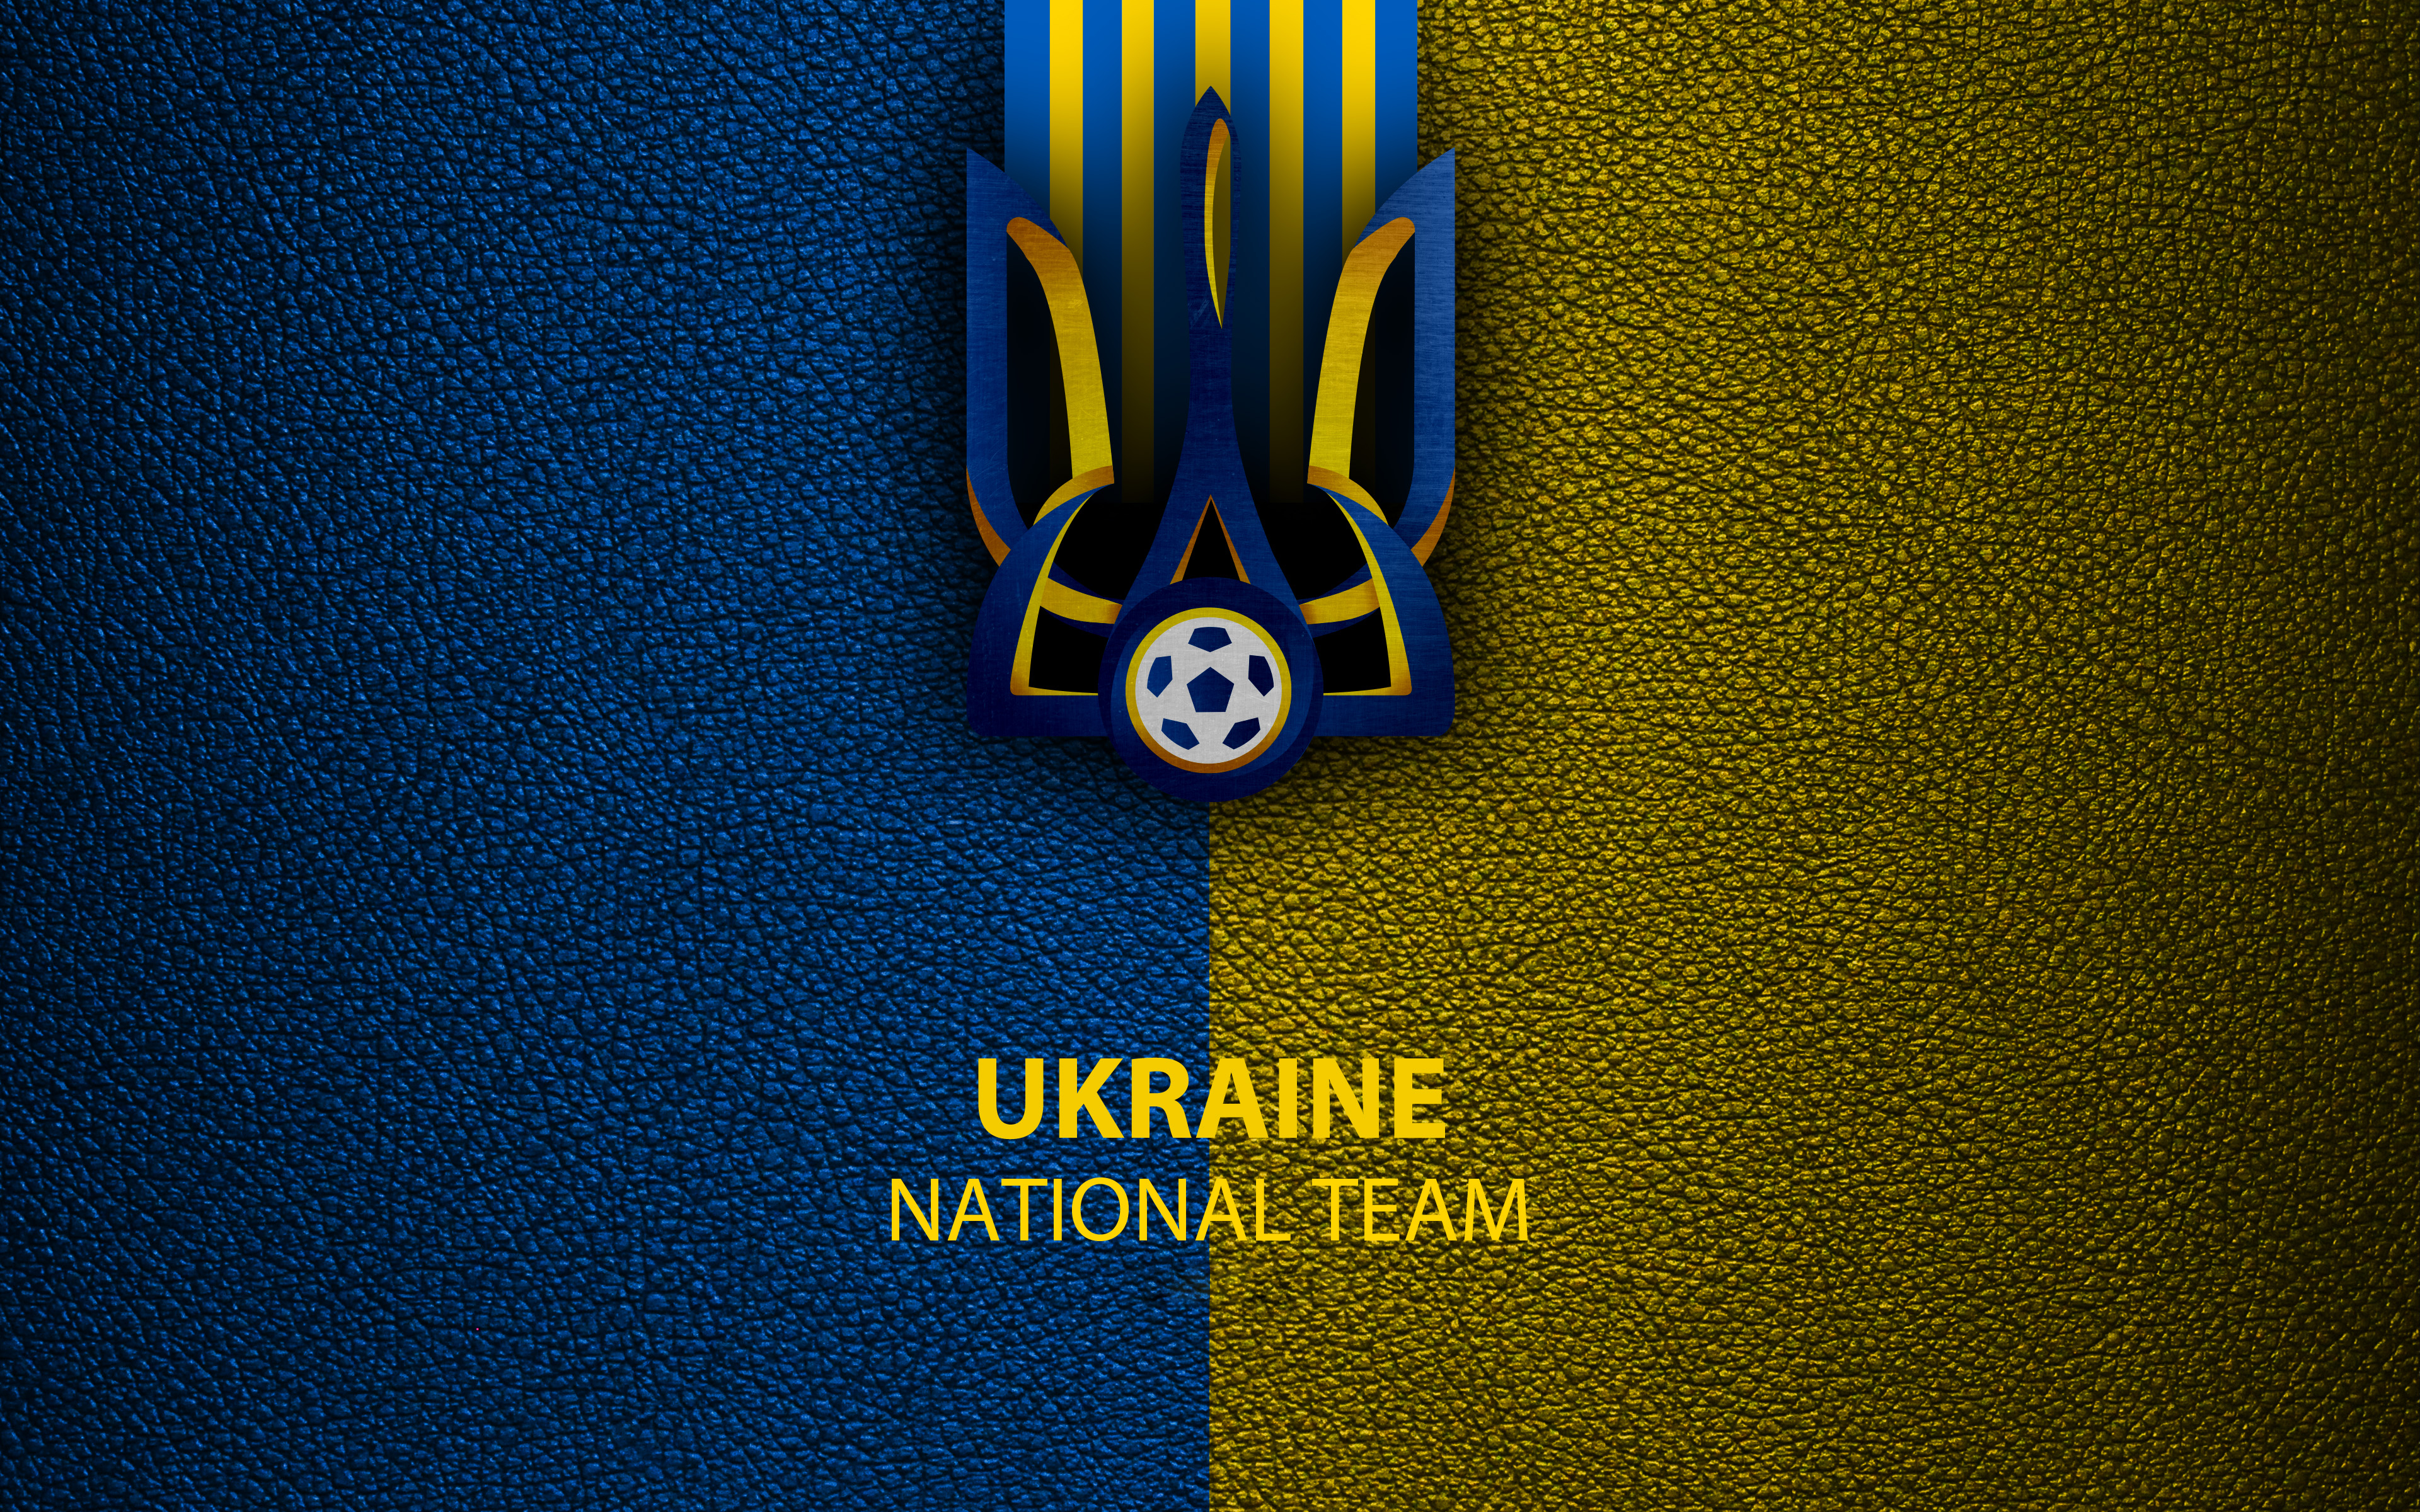 Ukraine National Football Team 4k Ultra HD Wallpaper Background